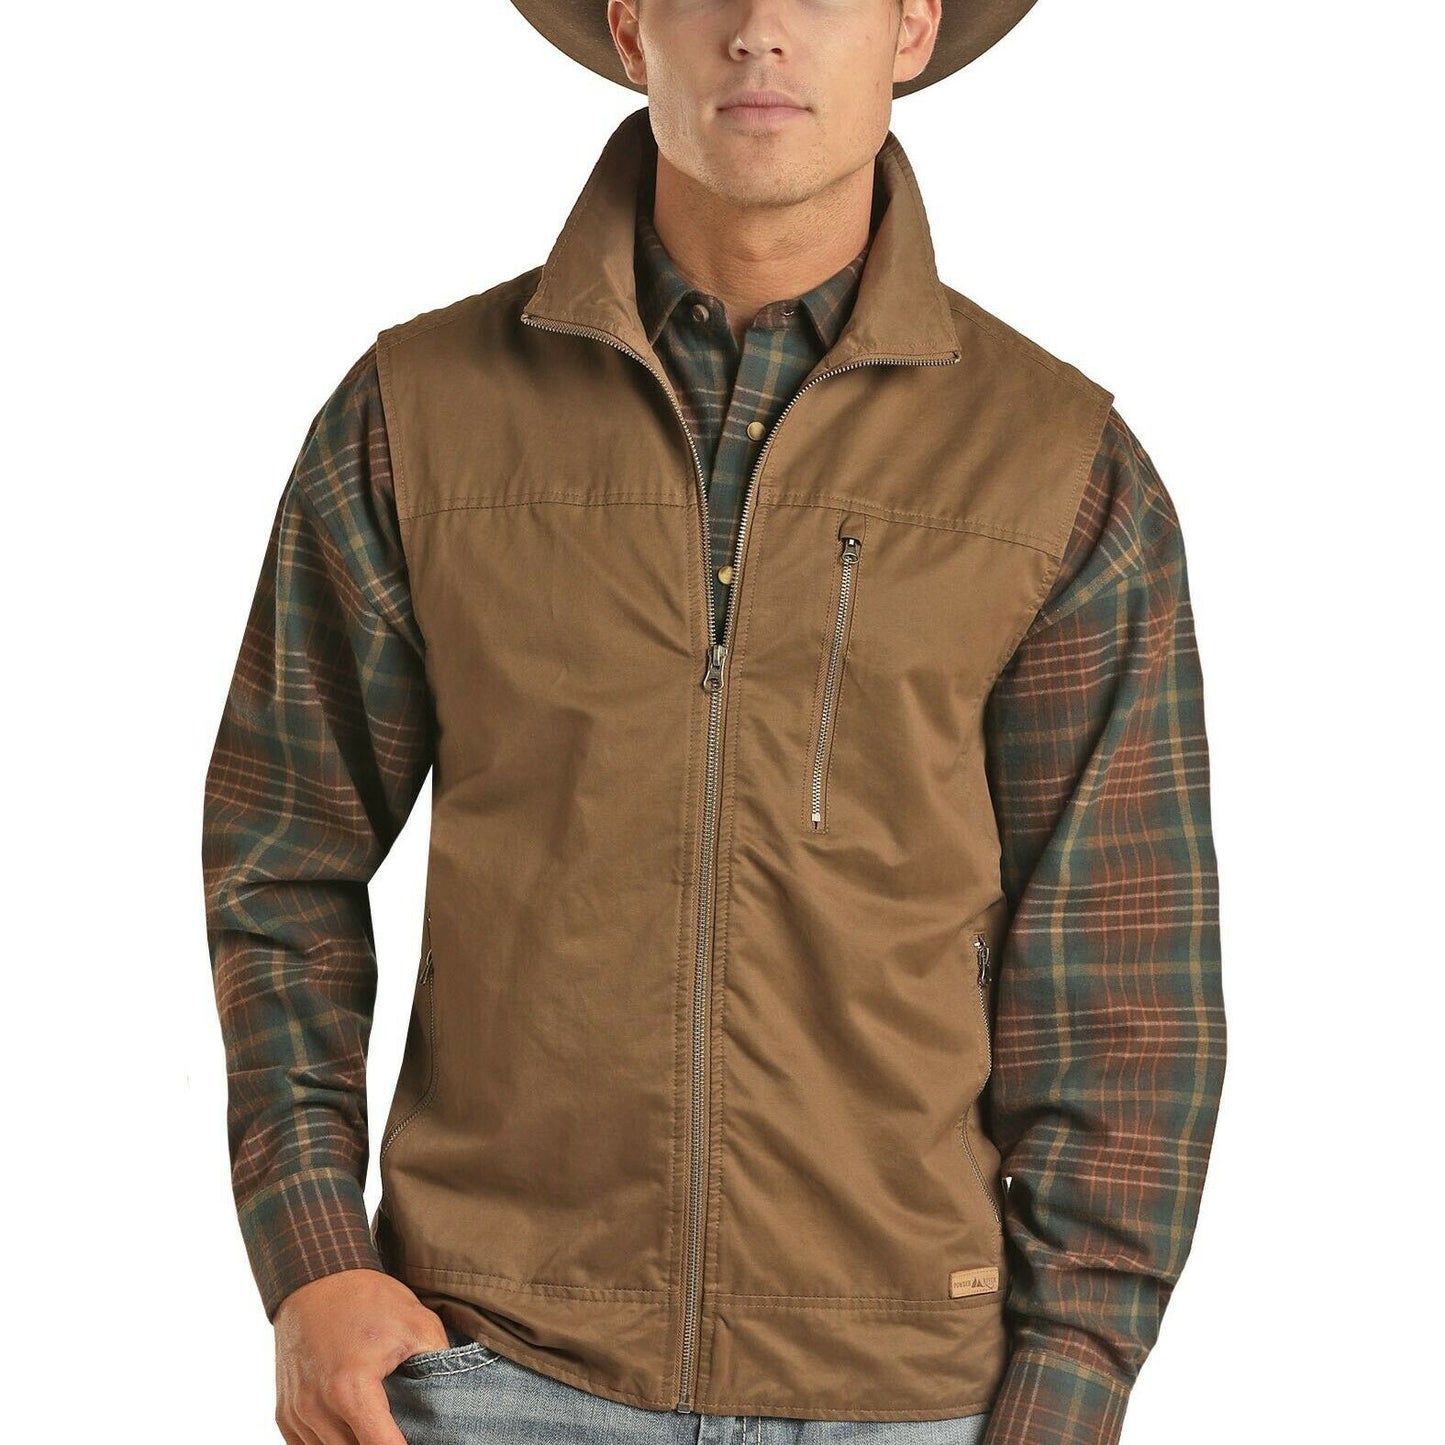 Powder River Outfitters Men's Cotton Brown Vest 98-6756-25